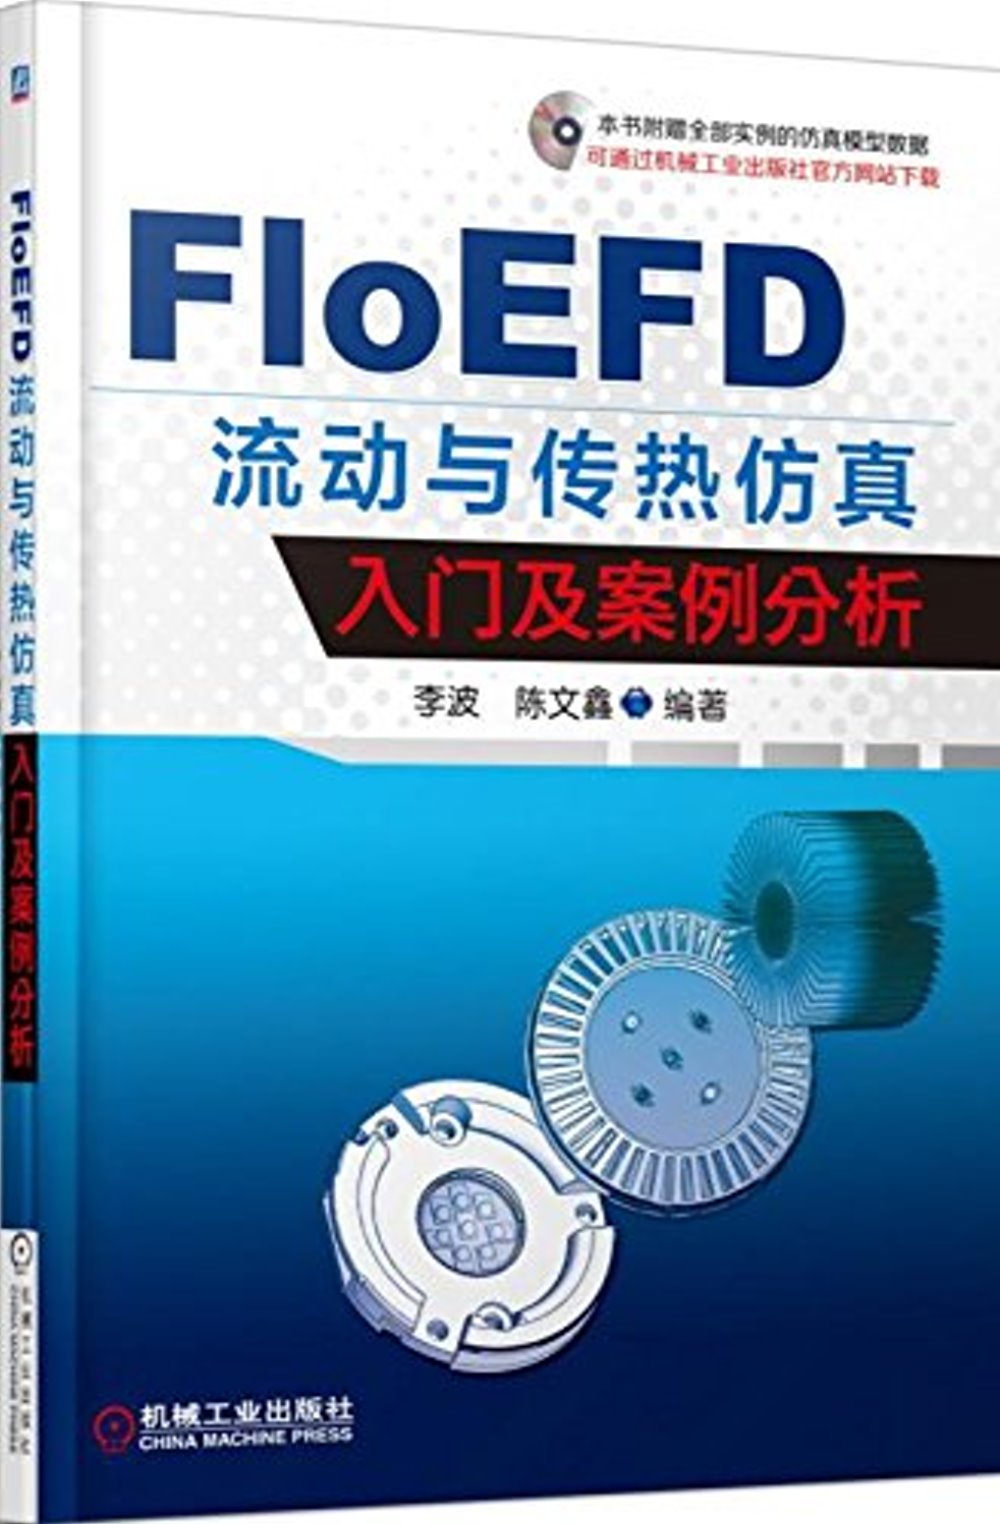 FloEFD流動與傳熱仿真入門及案例分析